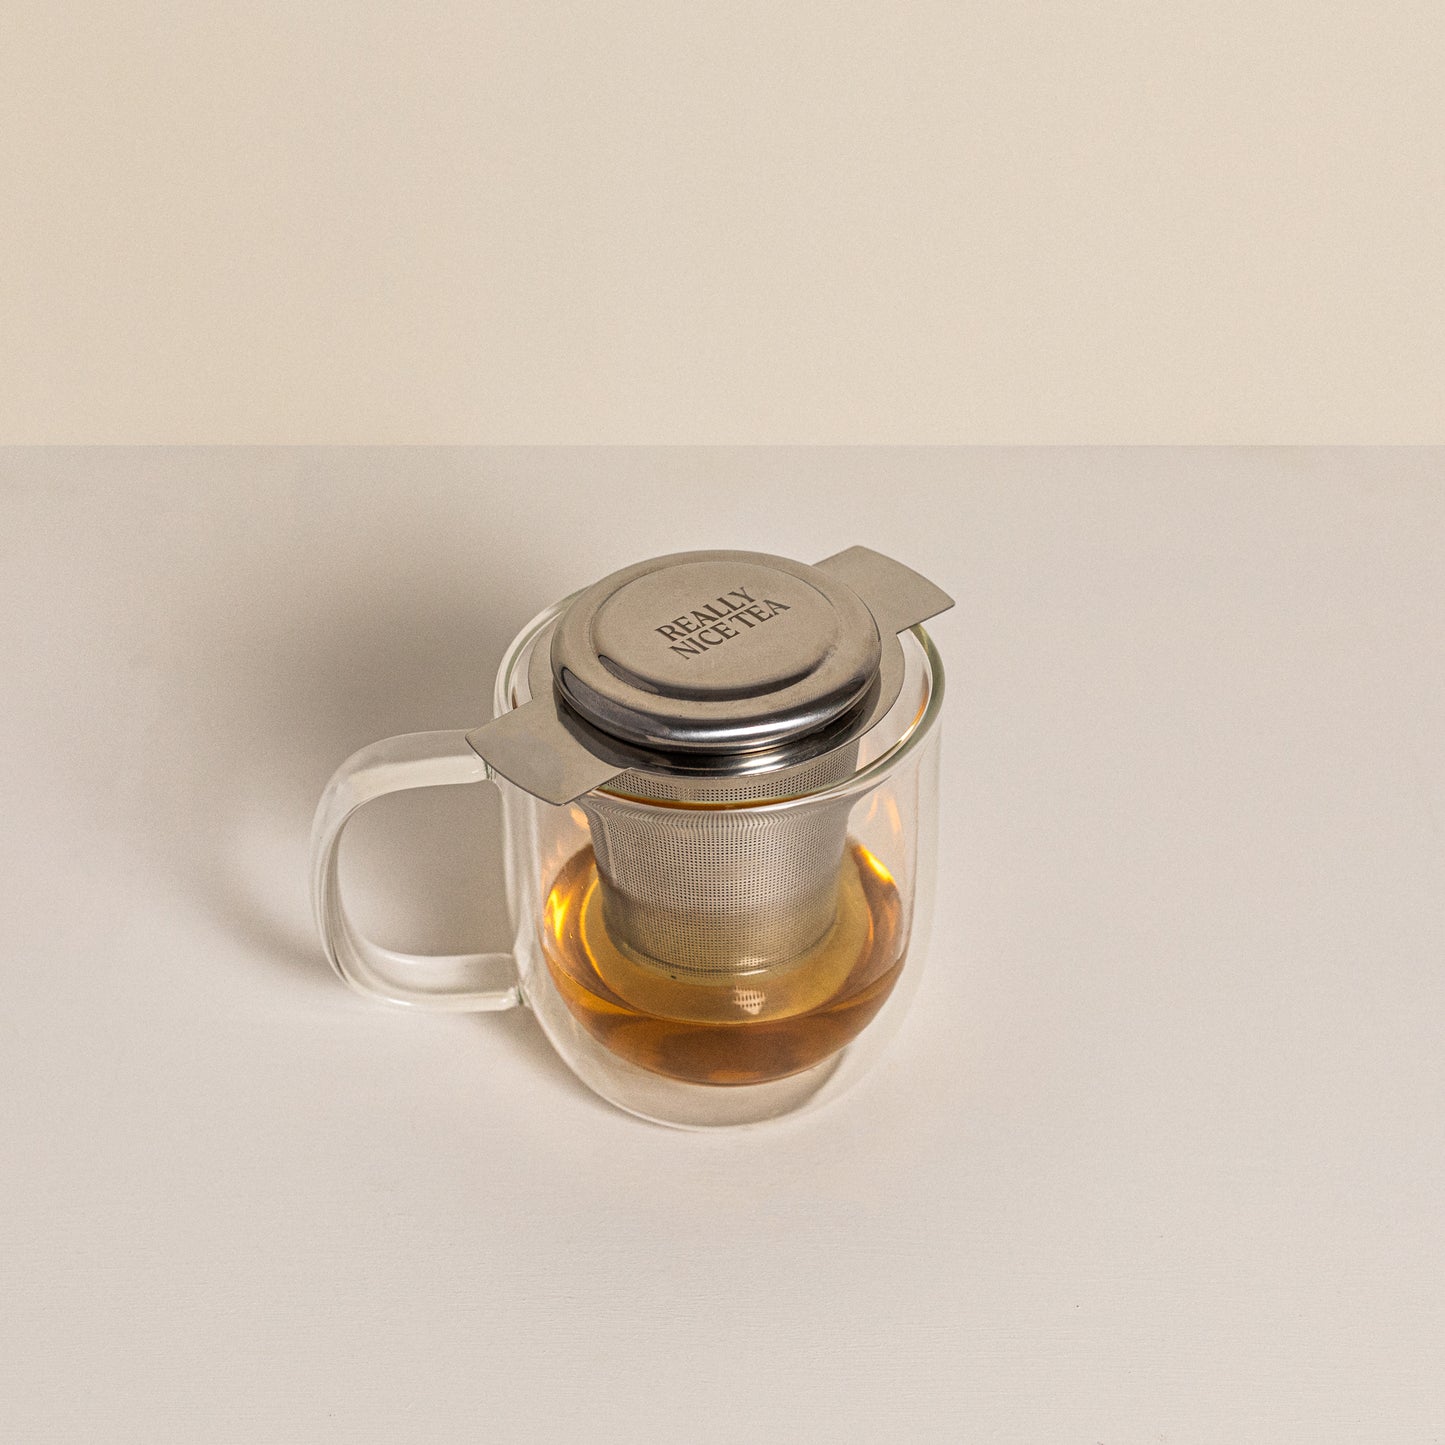 Really Nice Tea Stainless Steel Infuser